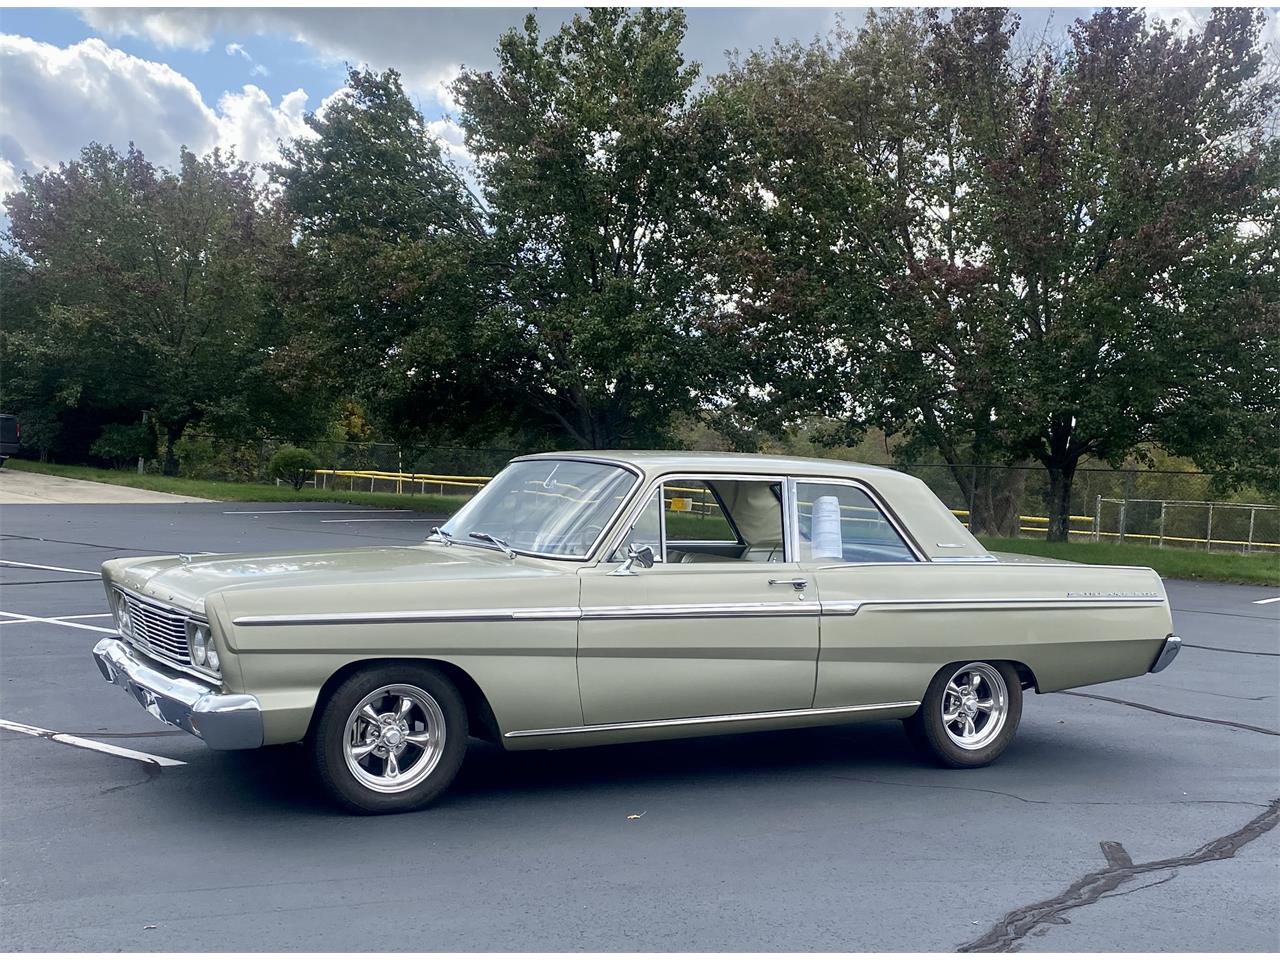 For Sale: 1965 Ford Fairlane in Smithfield, Rhode Island for sale in Smithfield, RI